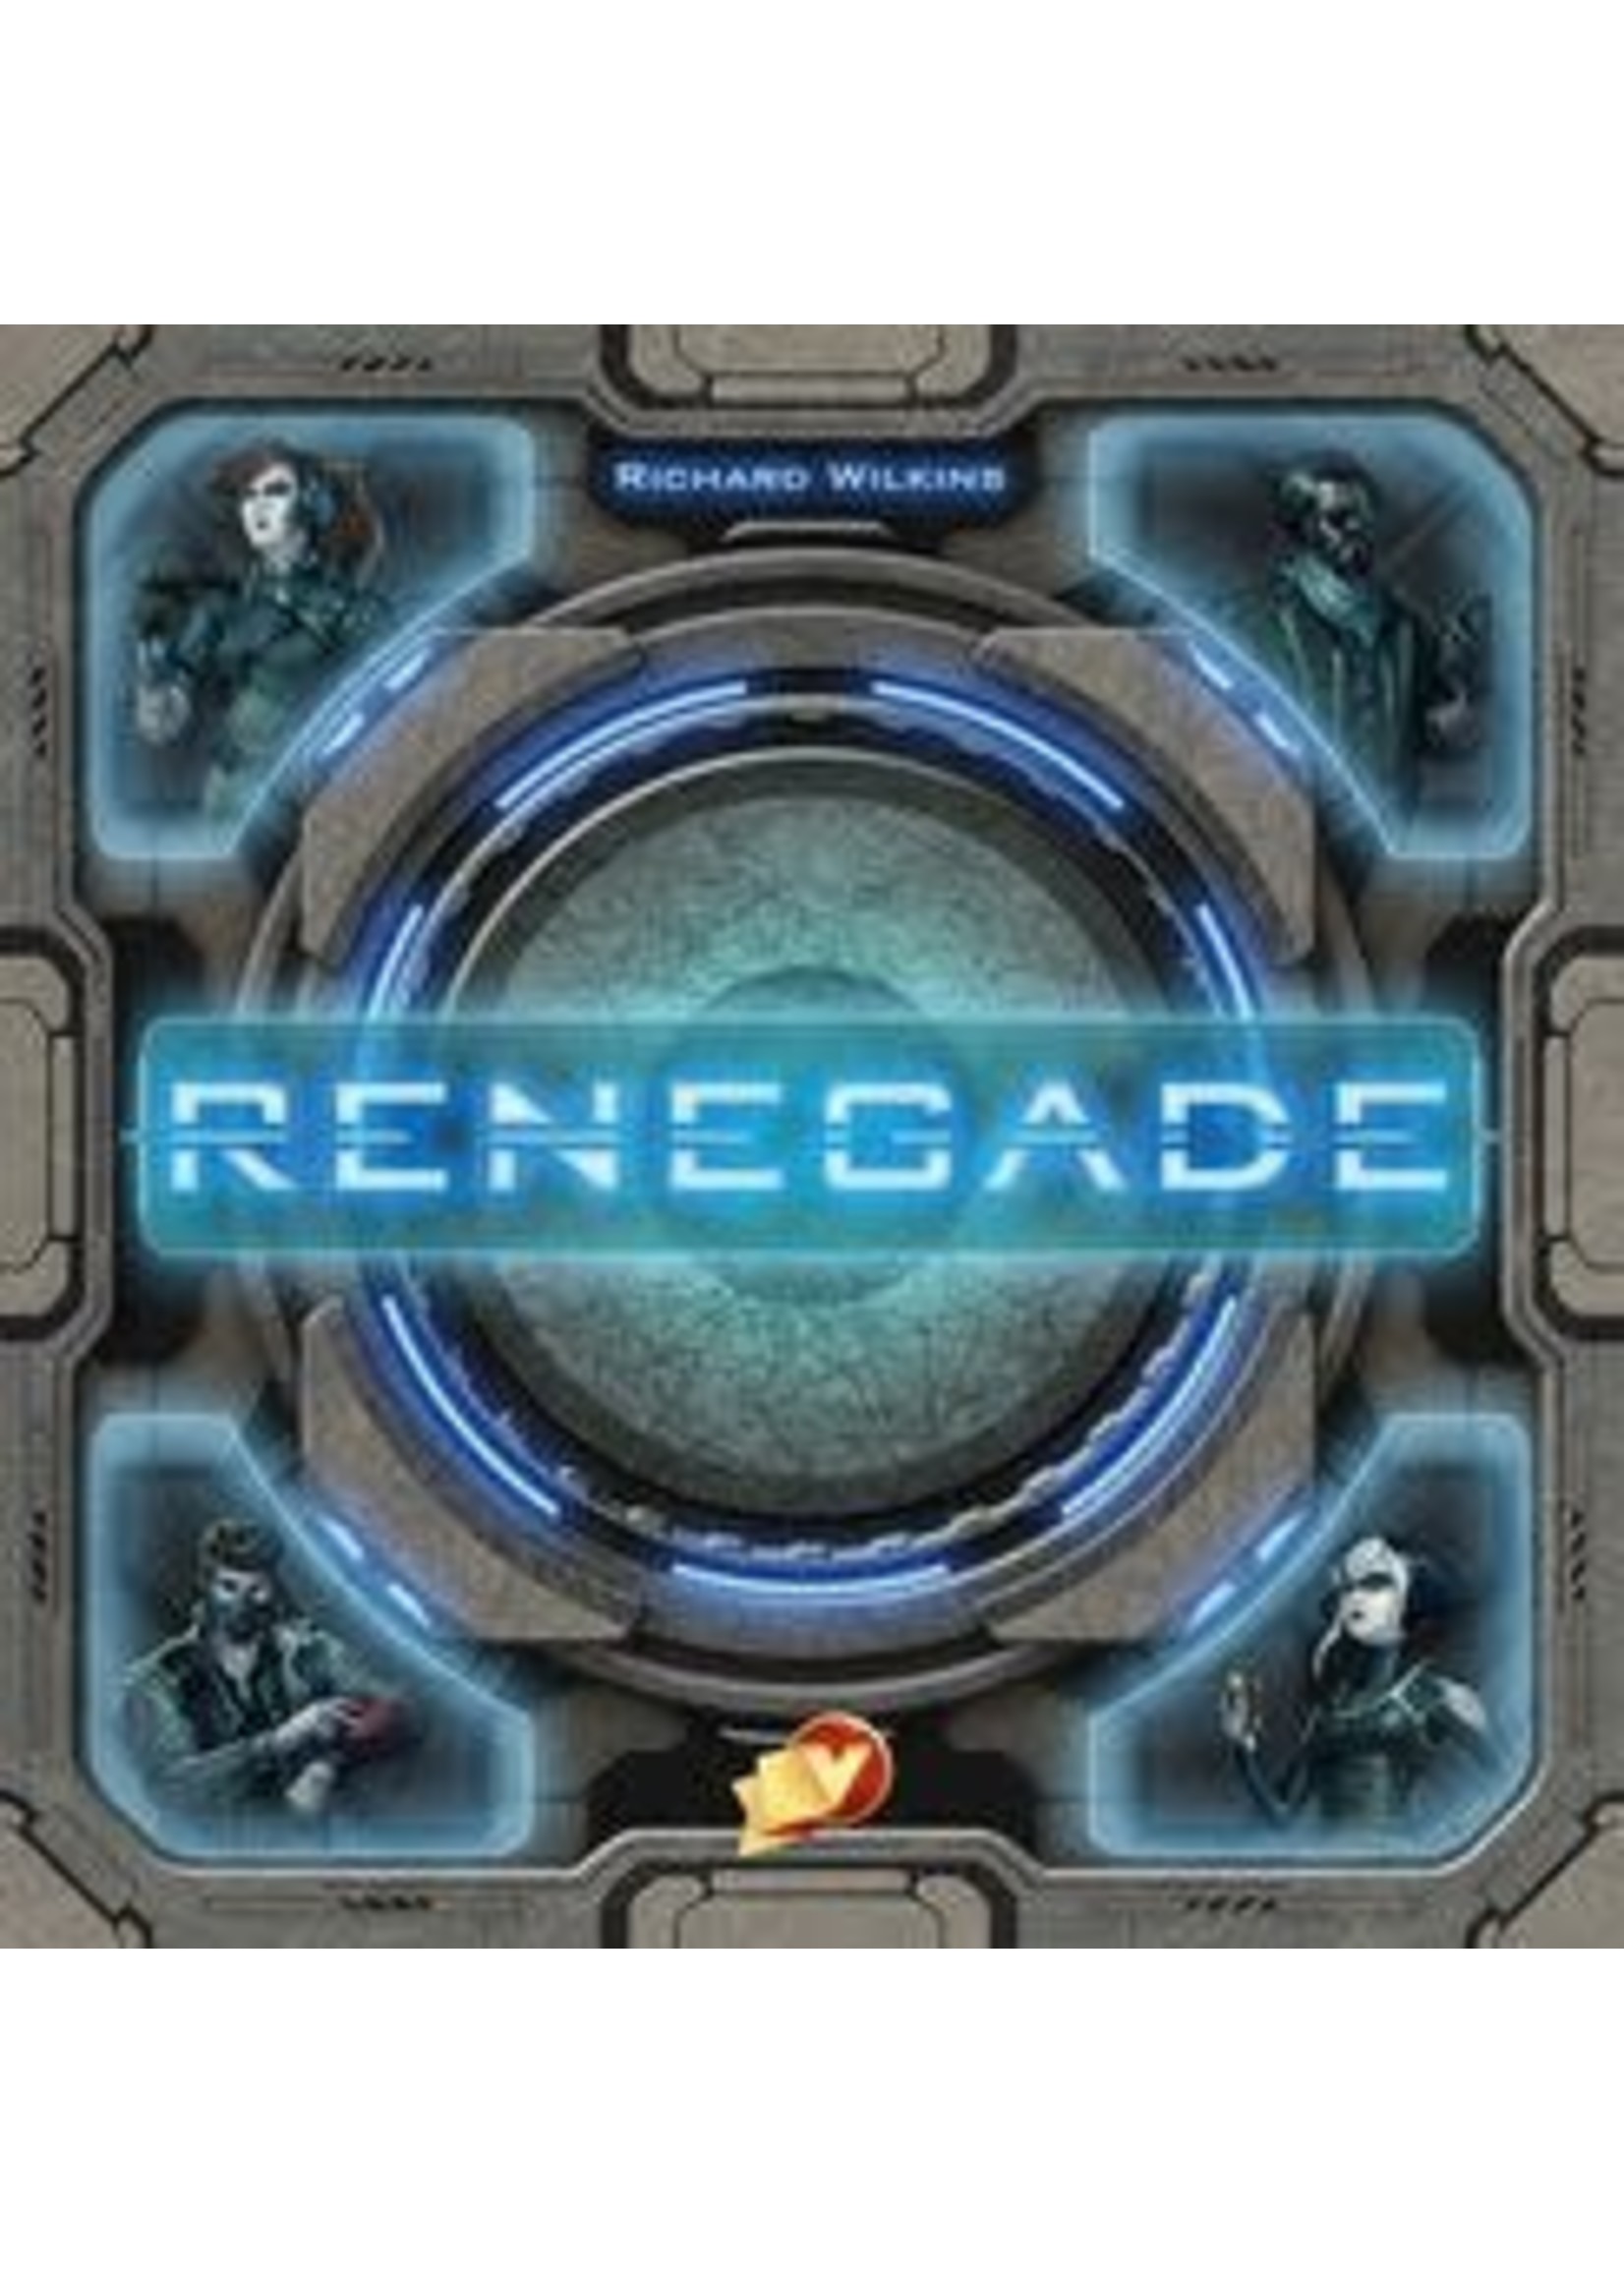 RENTAL - Renegade 1 lb 13.4 oz